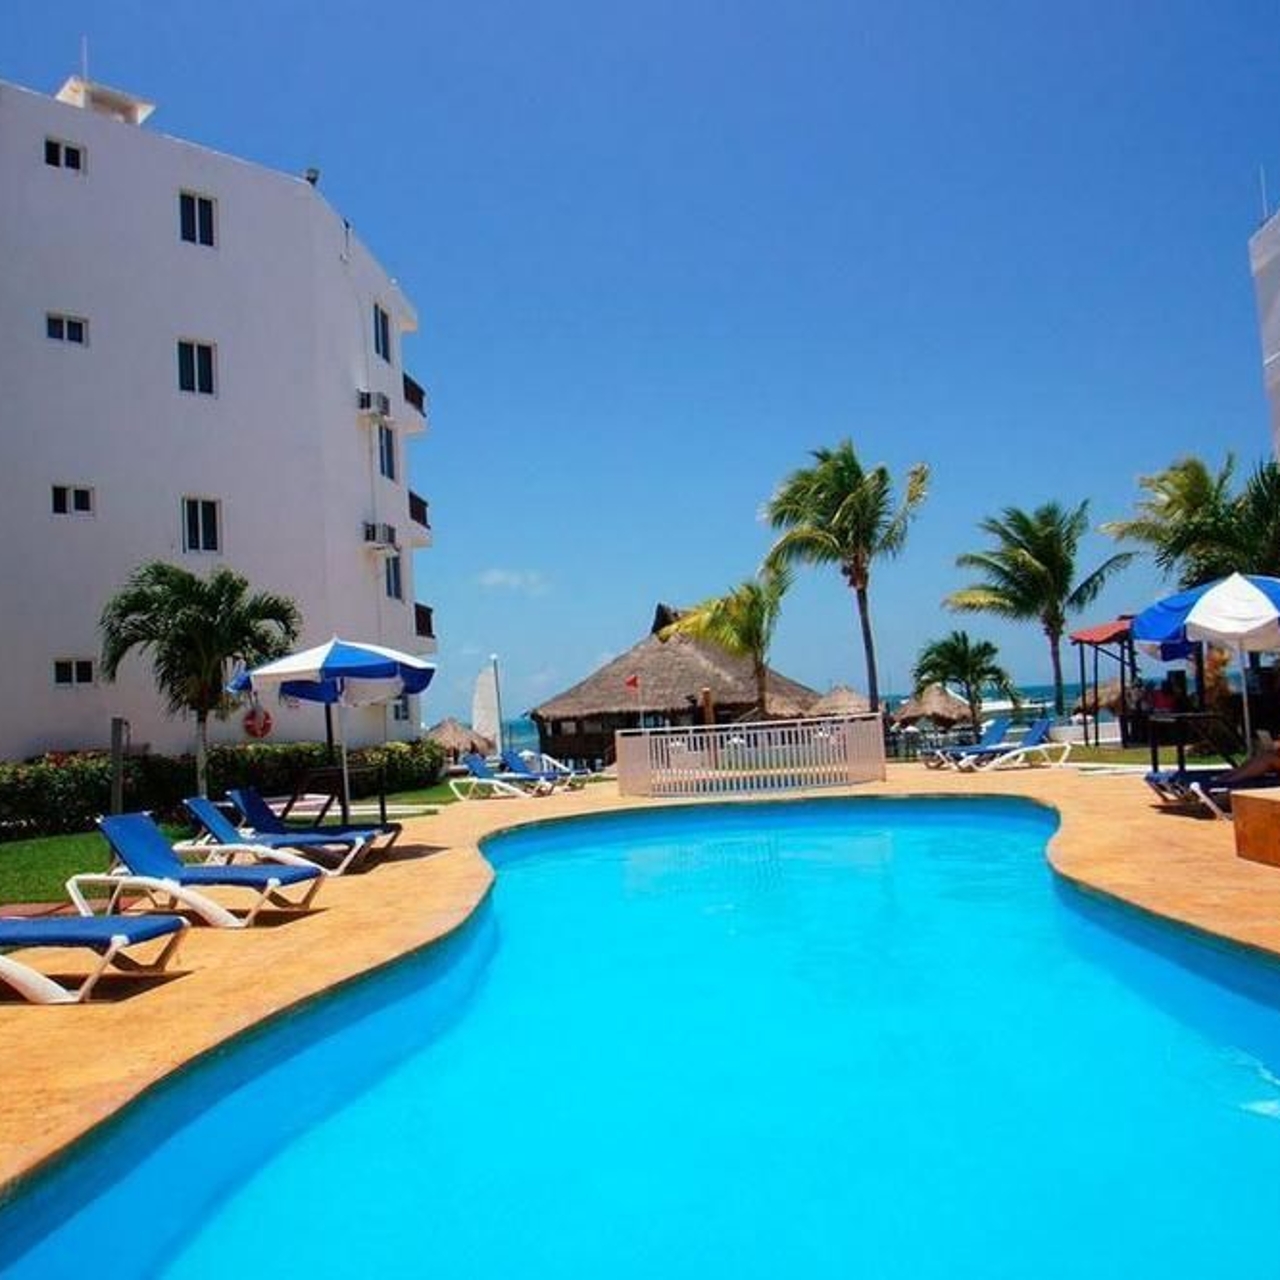 Hotel Imperial Las Perlas in Cancún (Quintana Roo) - HRS